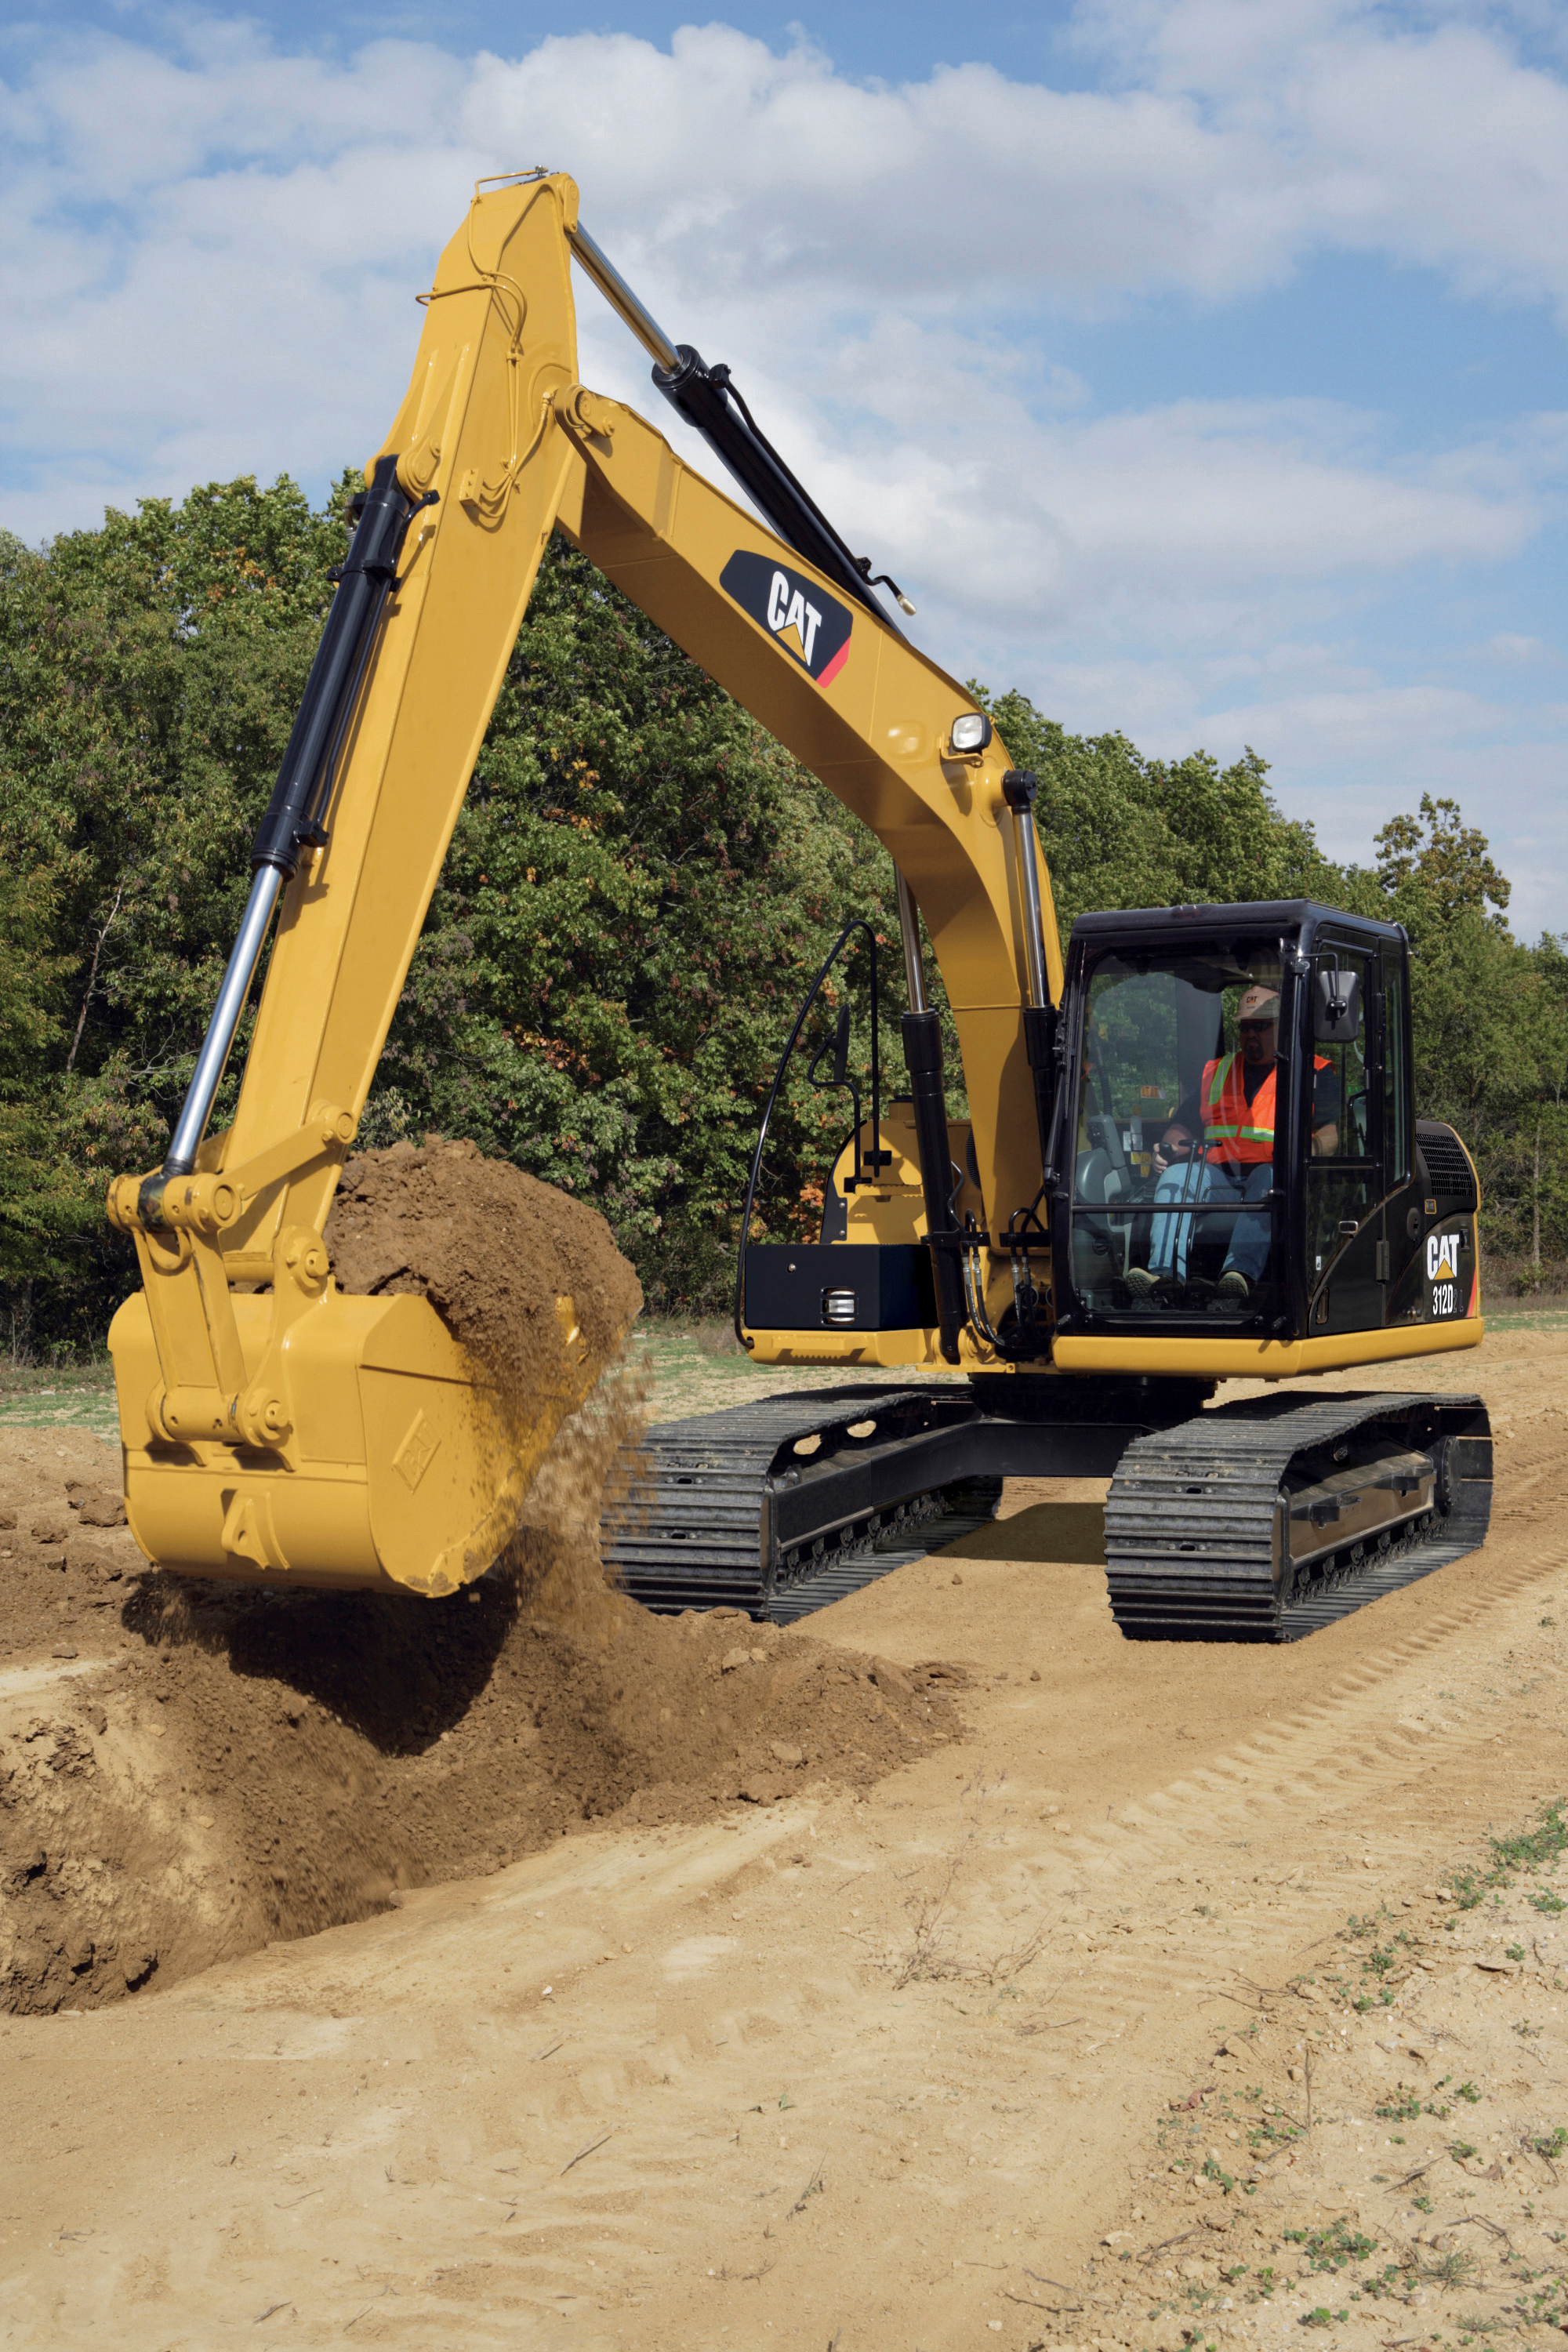 Cat 312D/D L Series 2 hydraulic excavator